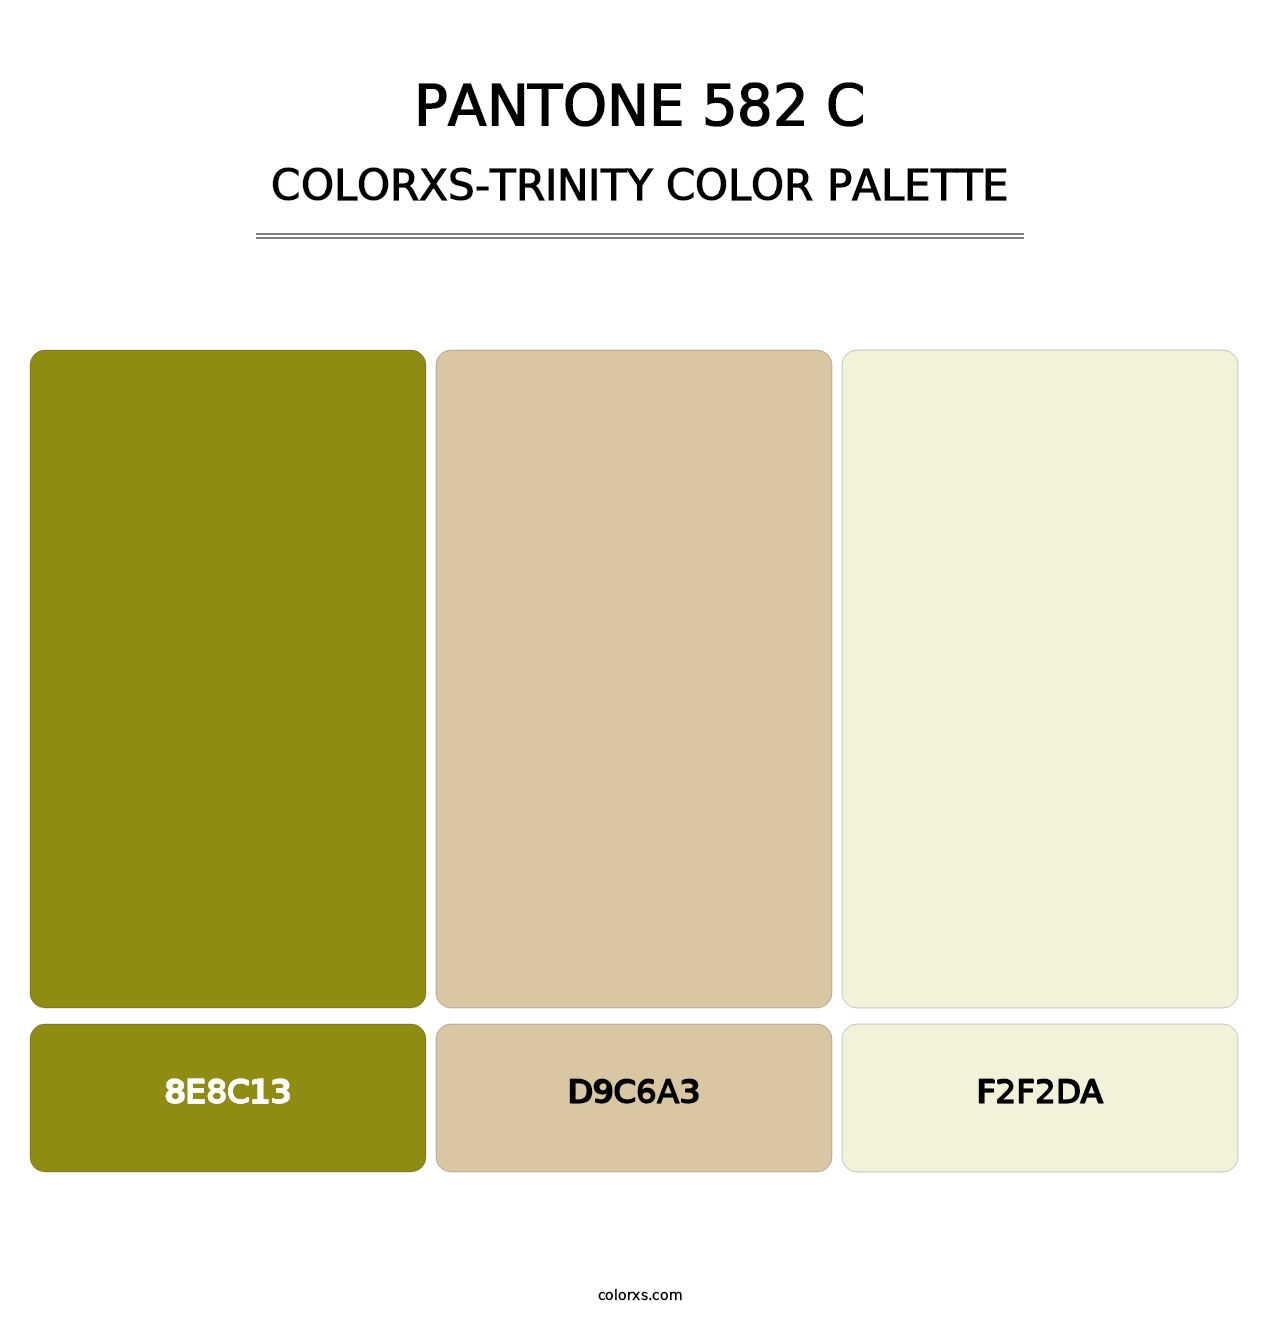 PANTONE 582 C - Colorxs Trinity Palette